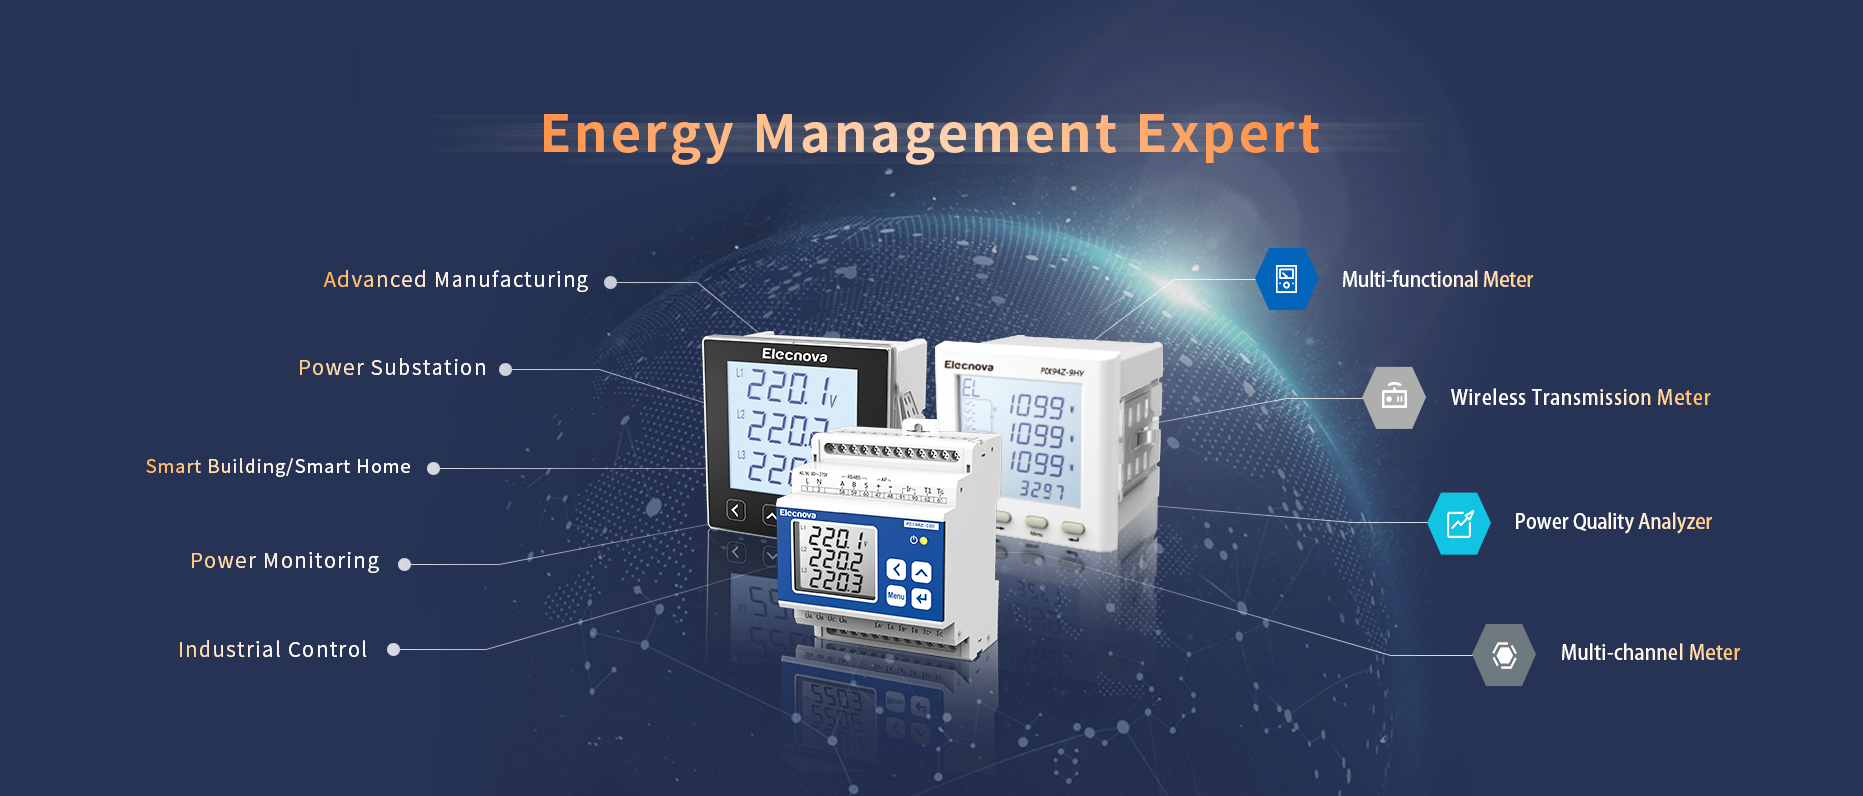 Energy Management Expert